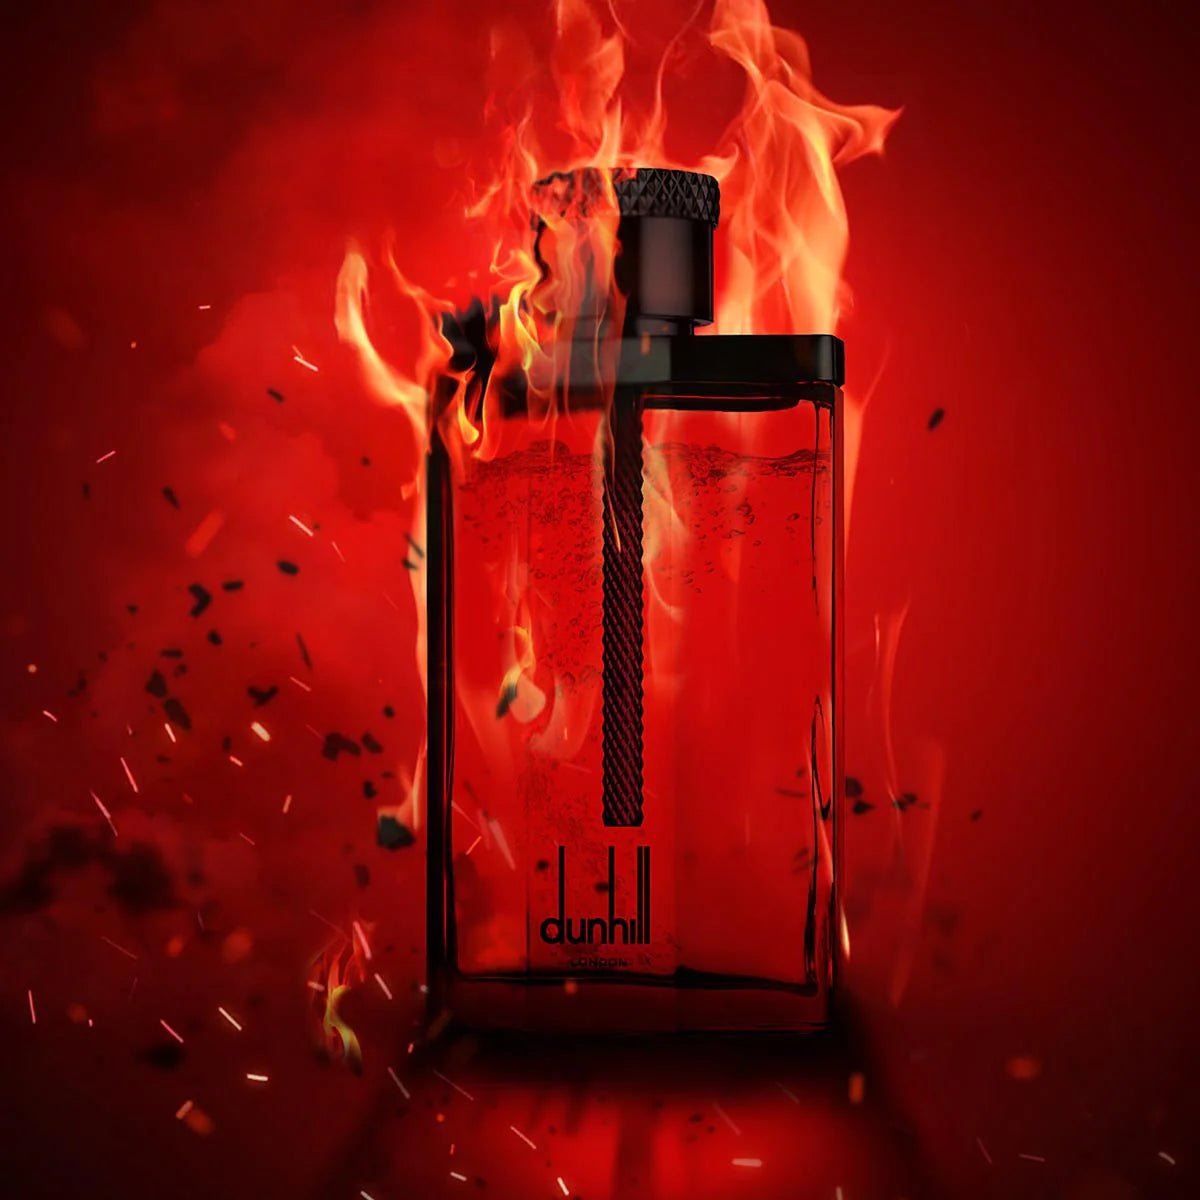 Dunhill Desire Red EDT Body Spray Travel Set | My Perfume Shop Australia